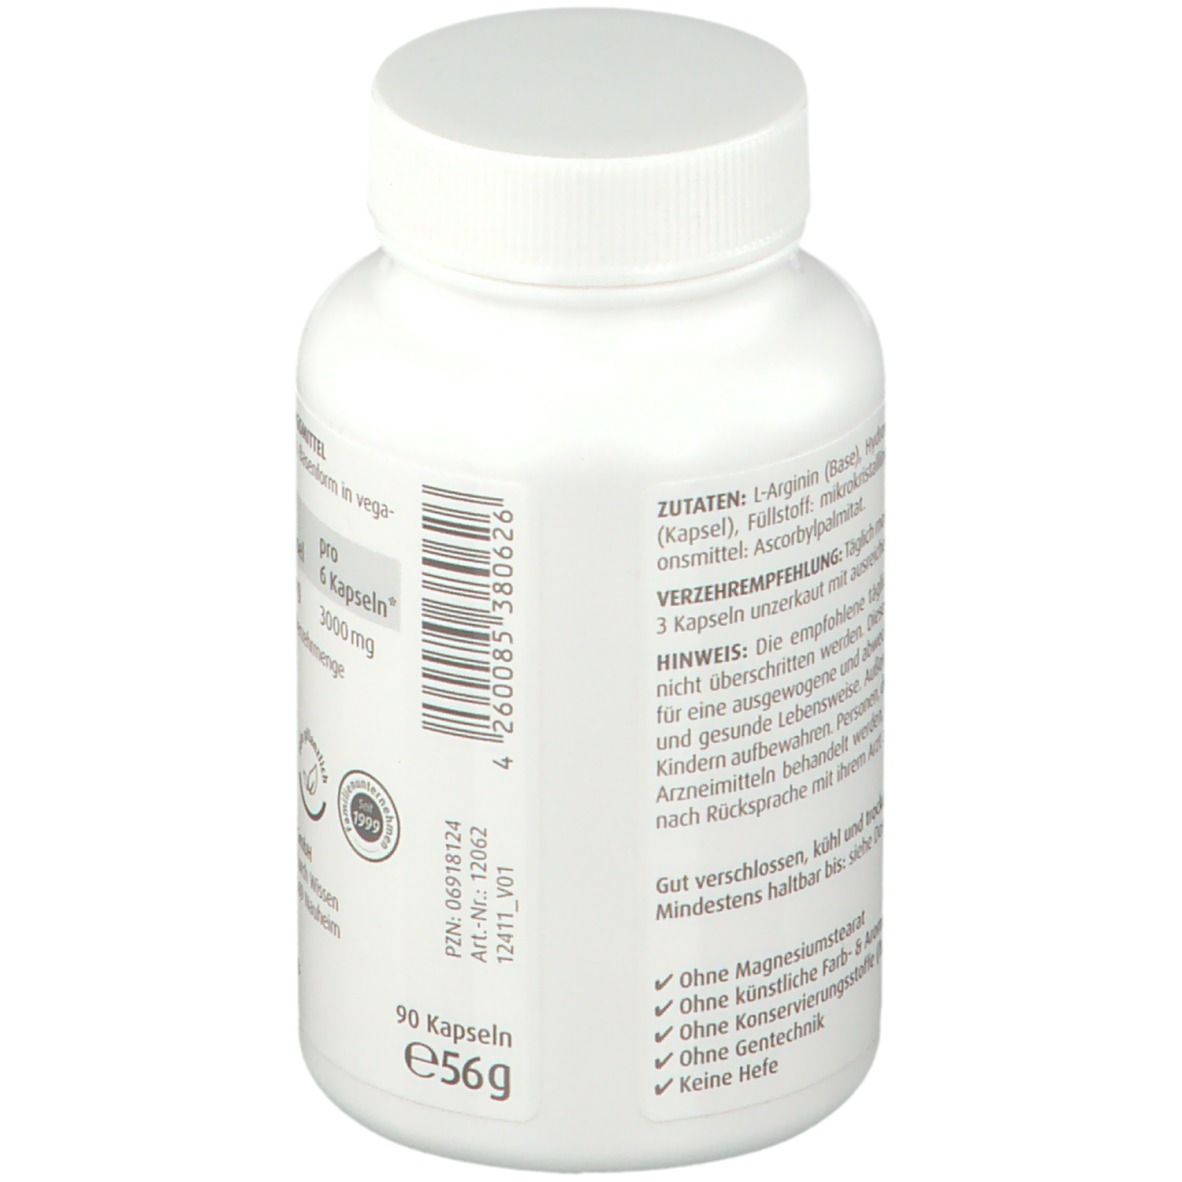 L Arginin Kapseln 500 mg ZeinPharma